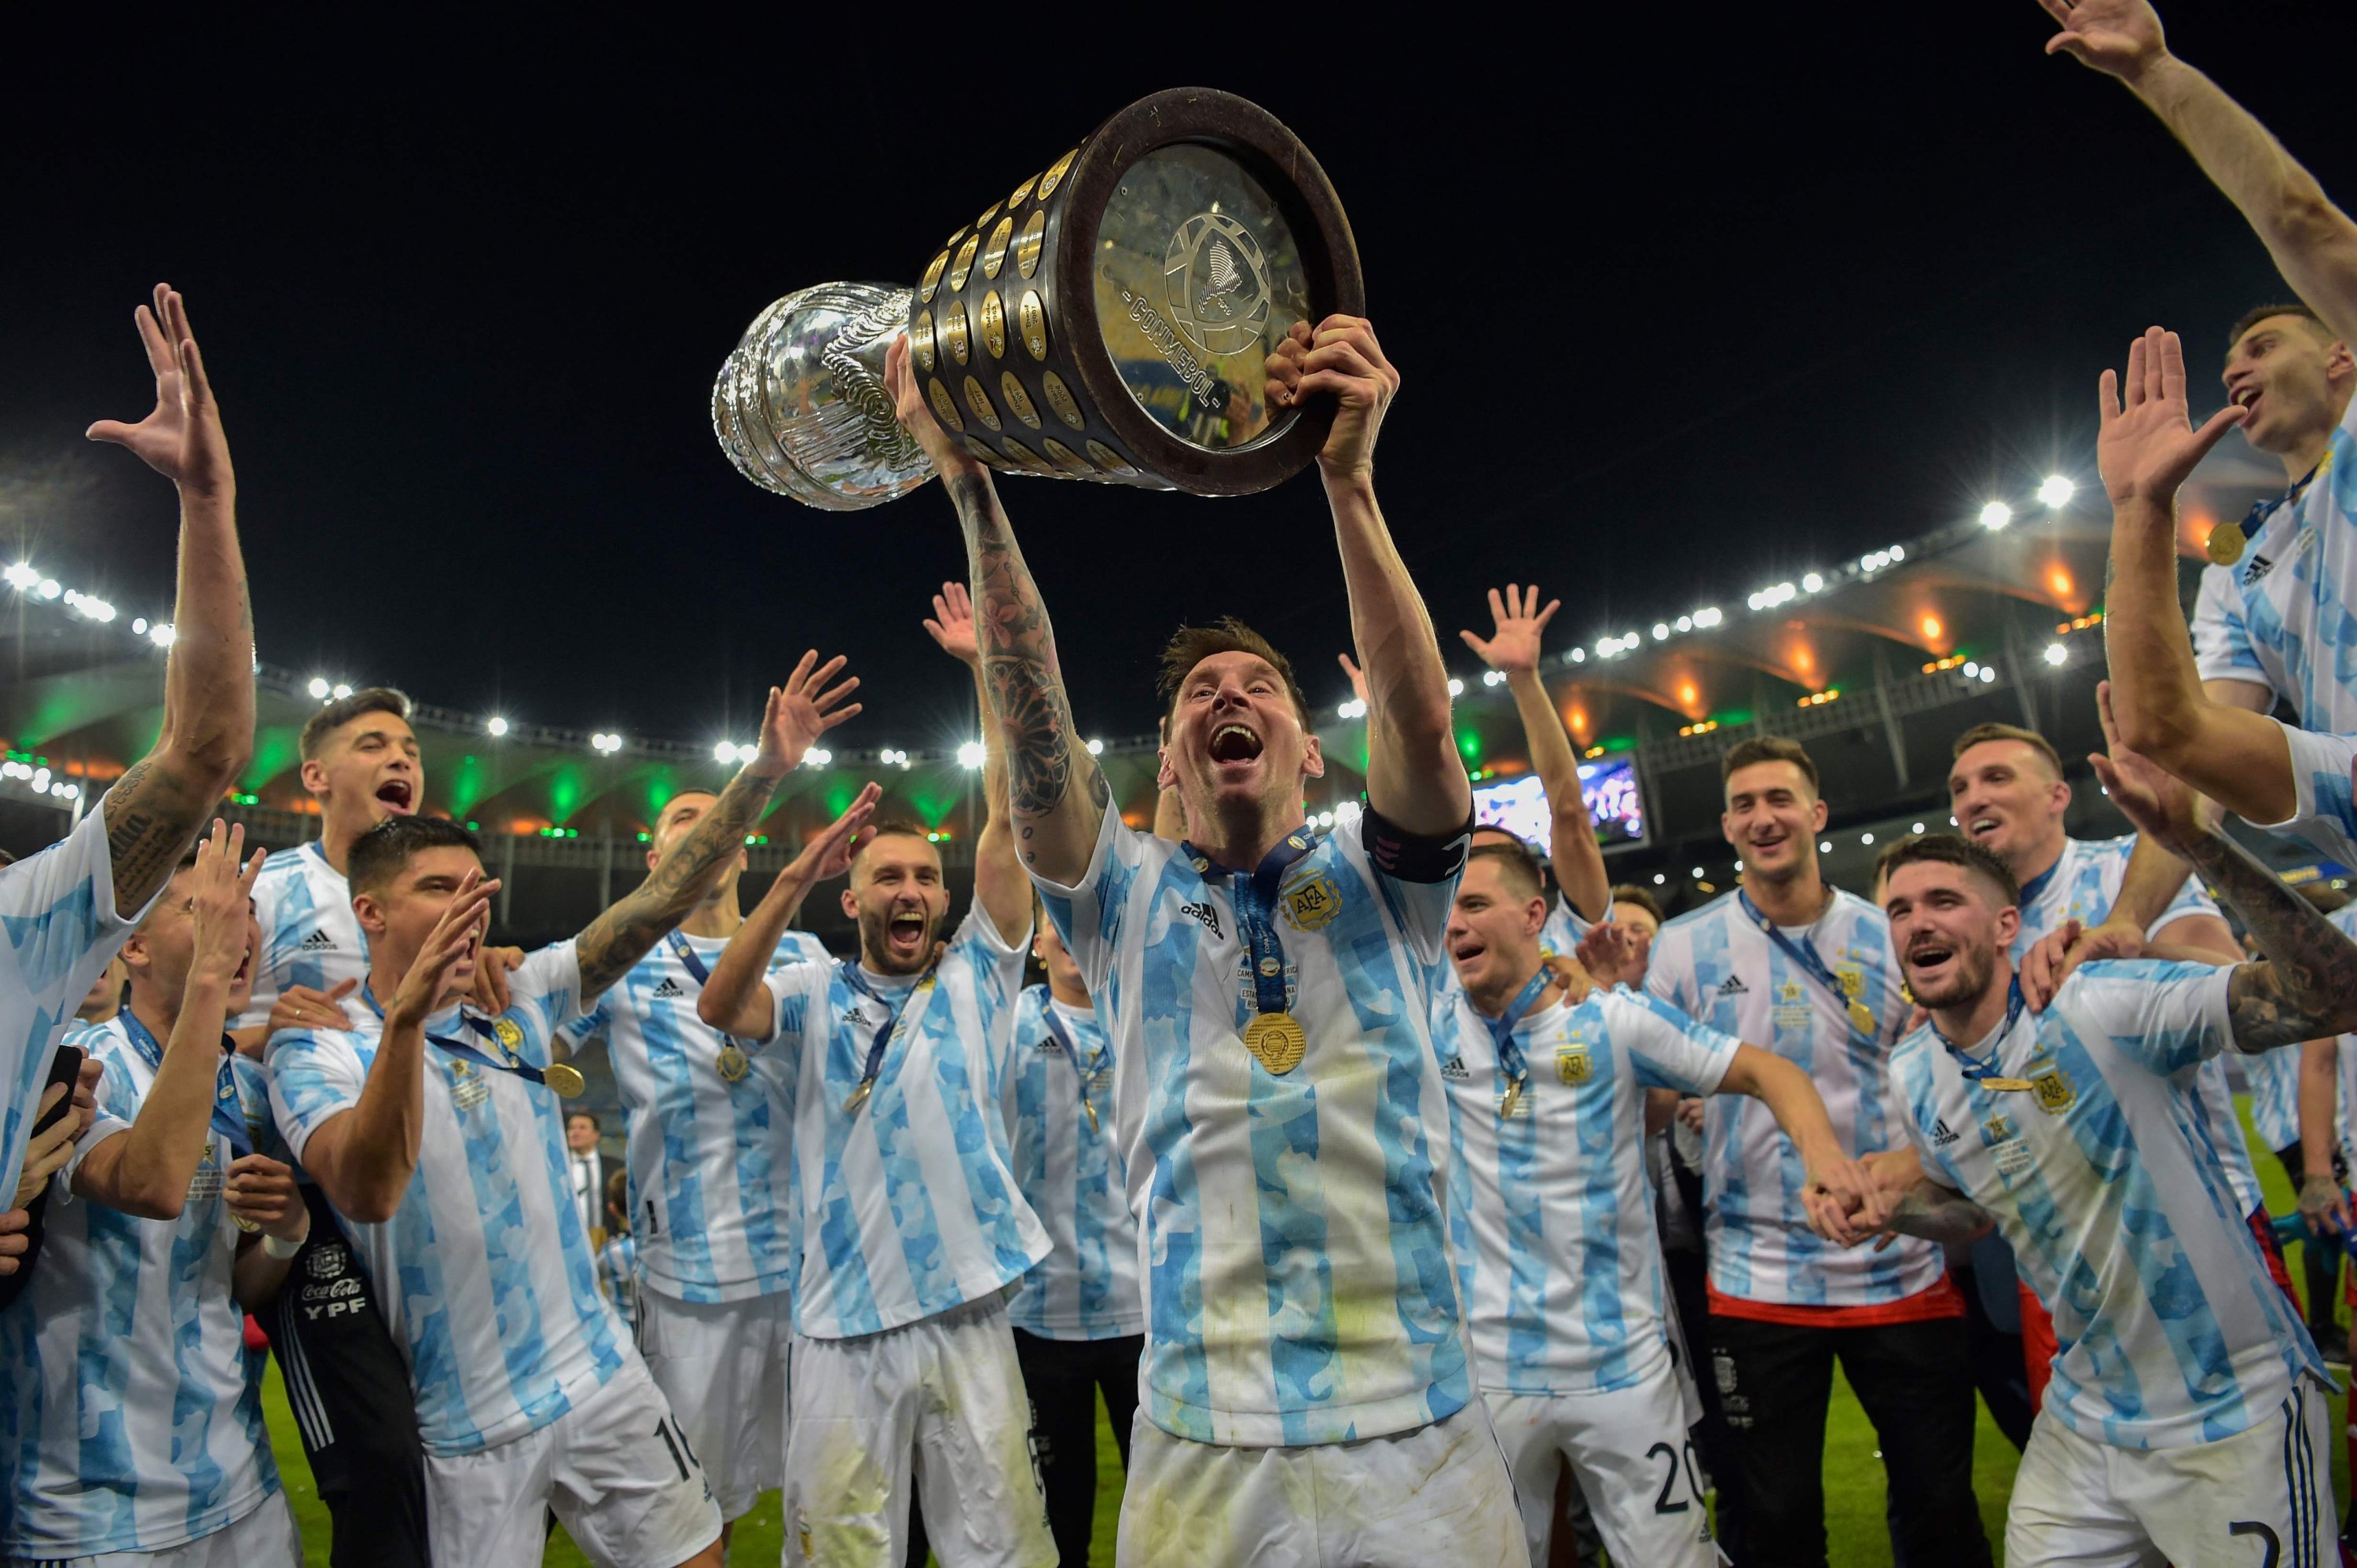 Lionel Messi's Copa America photo shatters Instagram record